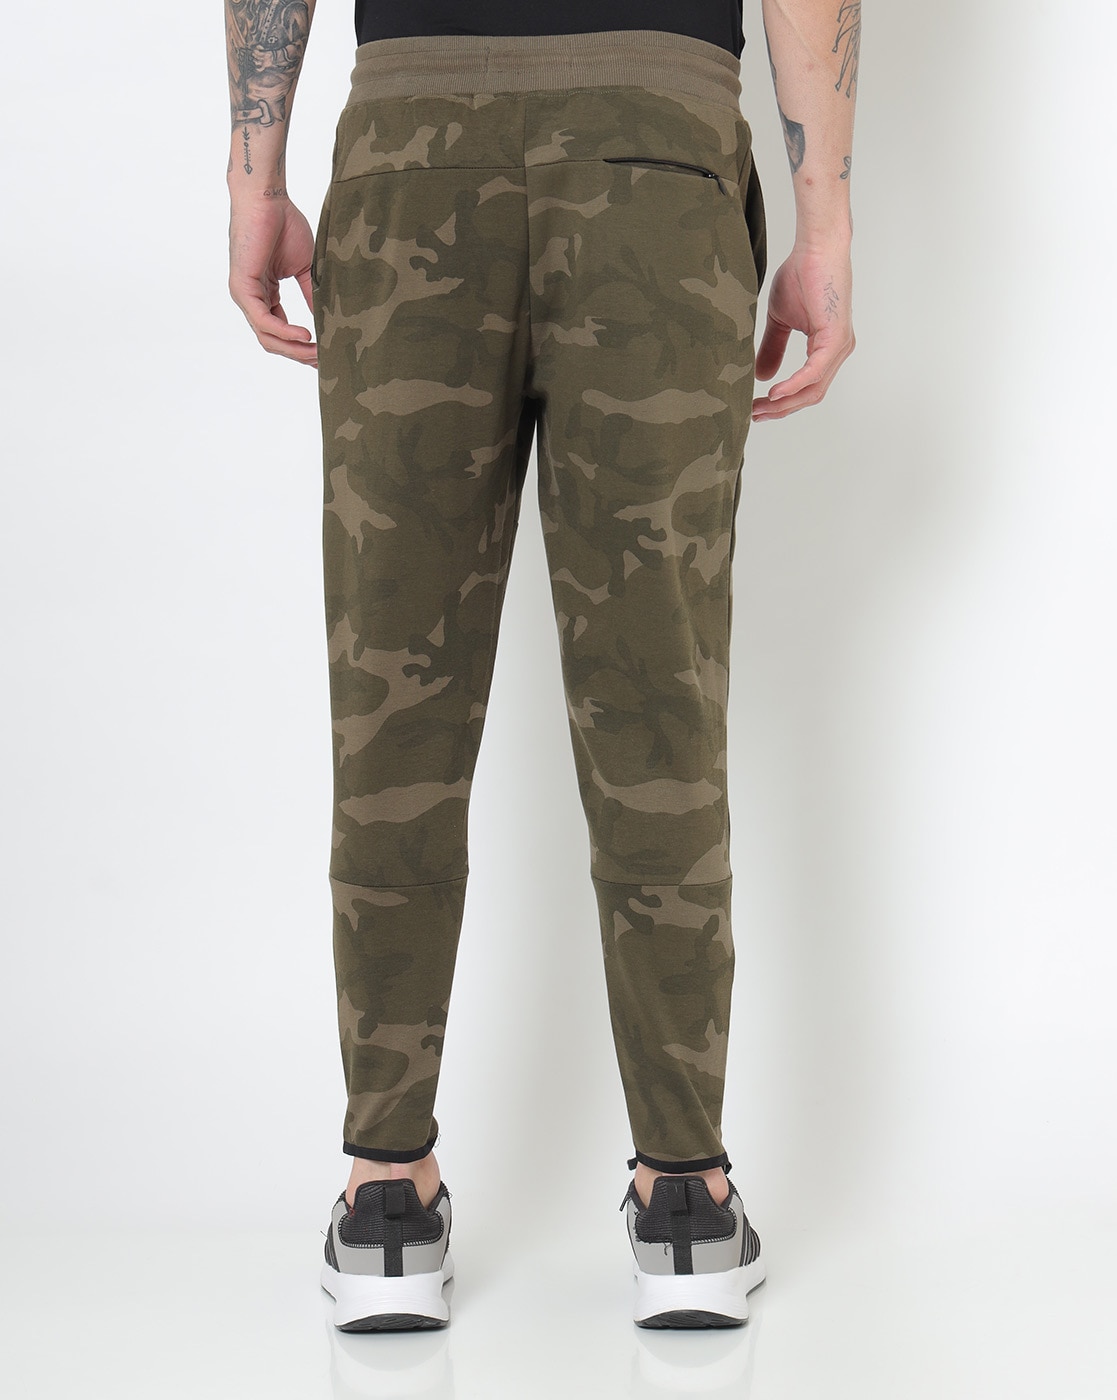 Lee Cooper Camouflage Trouser Cargo Knee Pad Holster Pocket  eBay